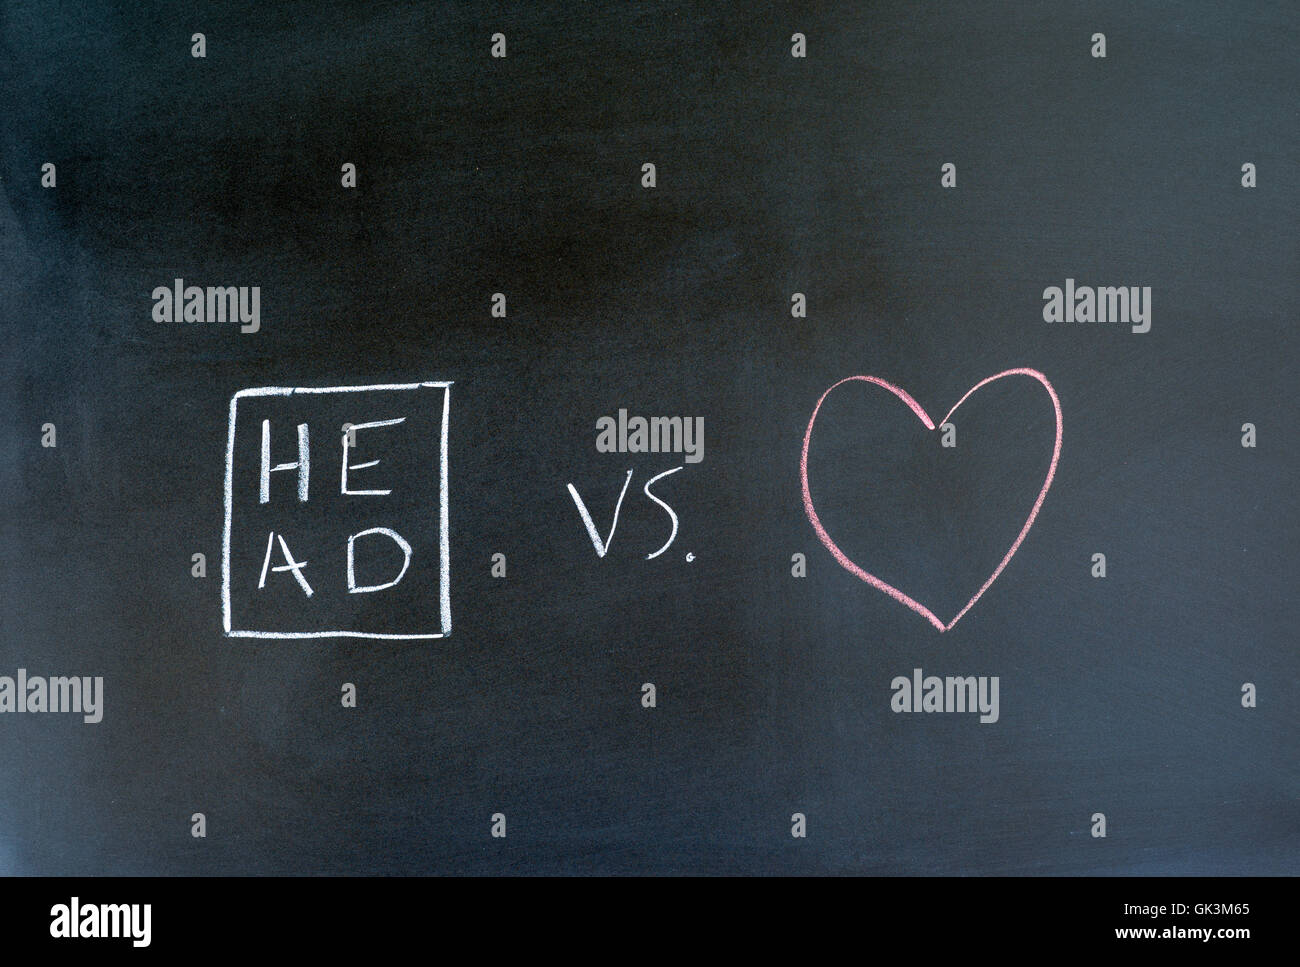 head and heart symbols drawn on a chalkboard. Stock Photo